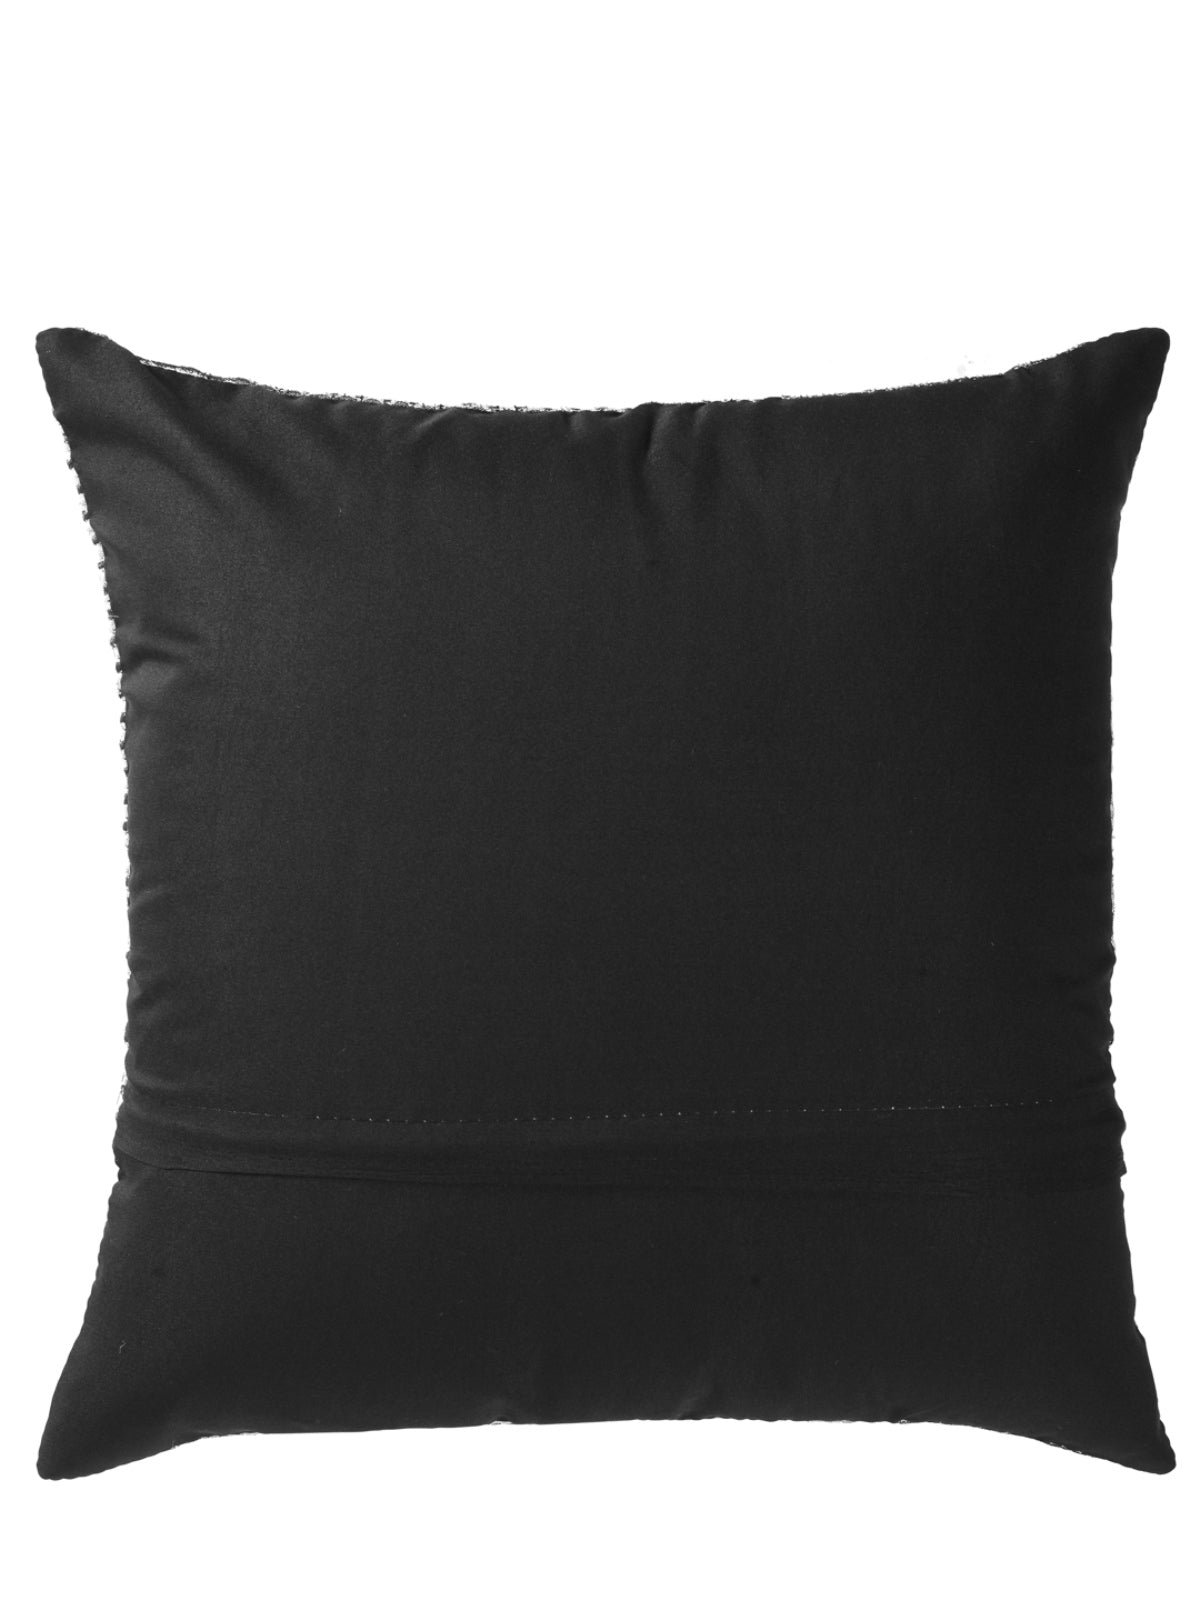 Soft Chenille Geometric Throw Pillow/Cushion Covers 16x16 Set of 5 - Black